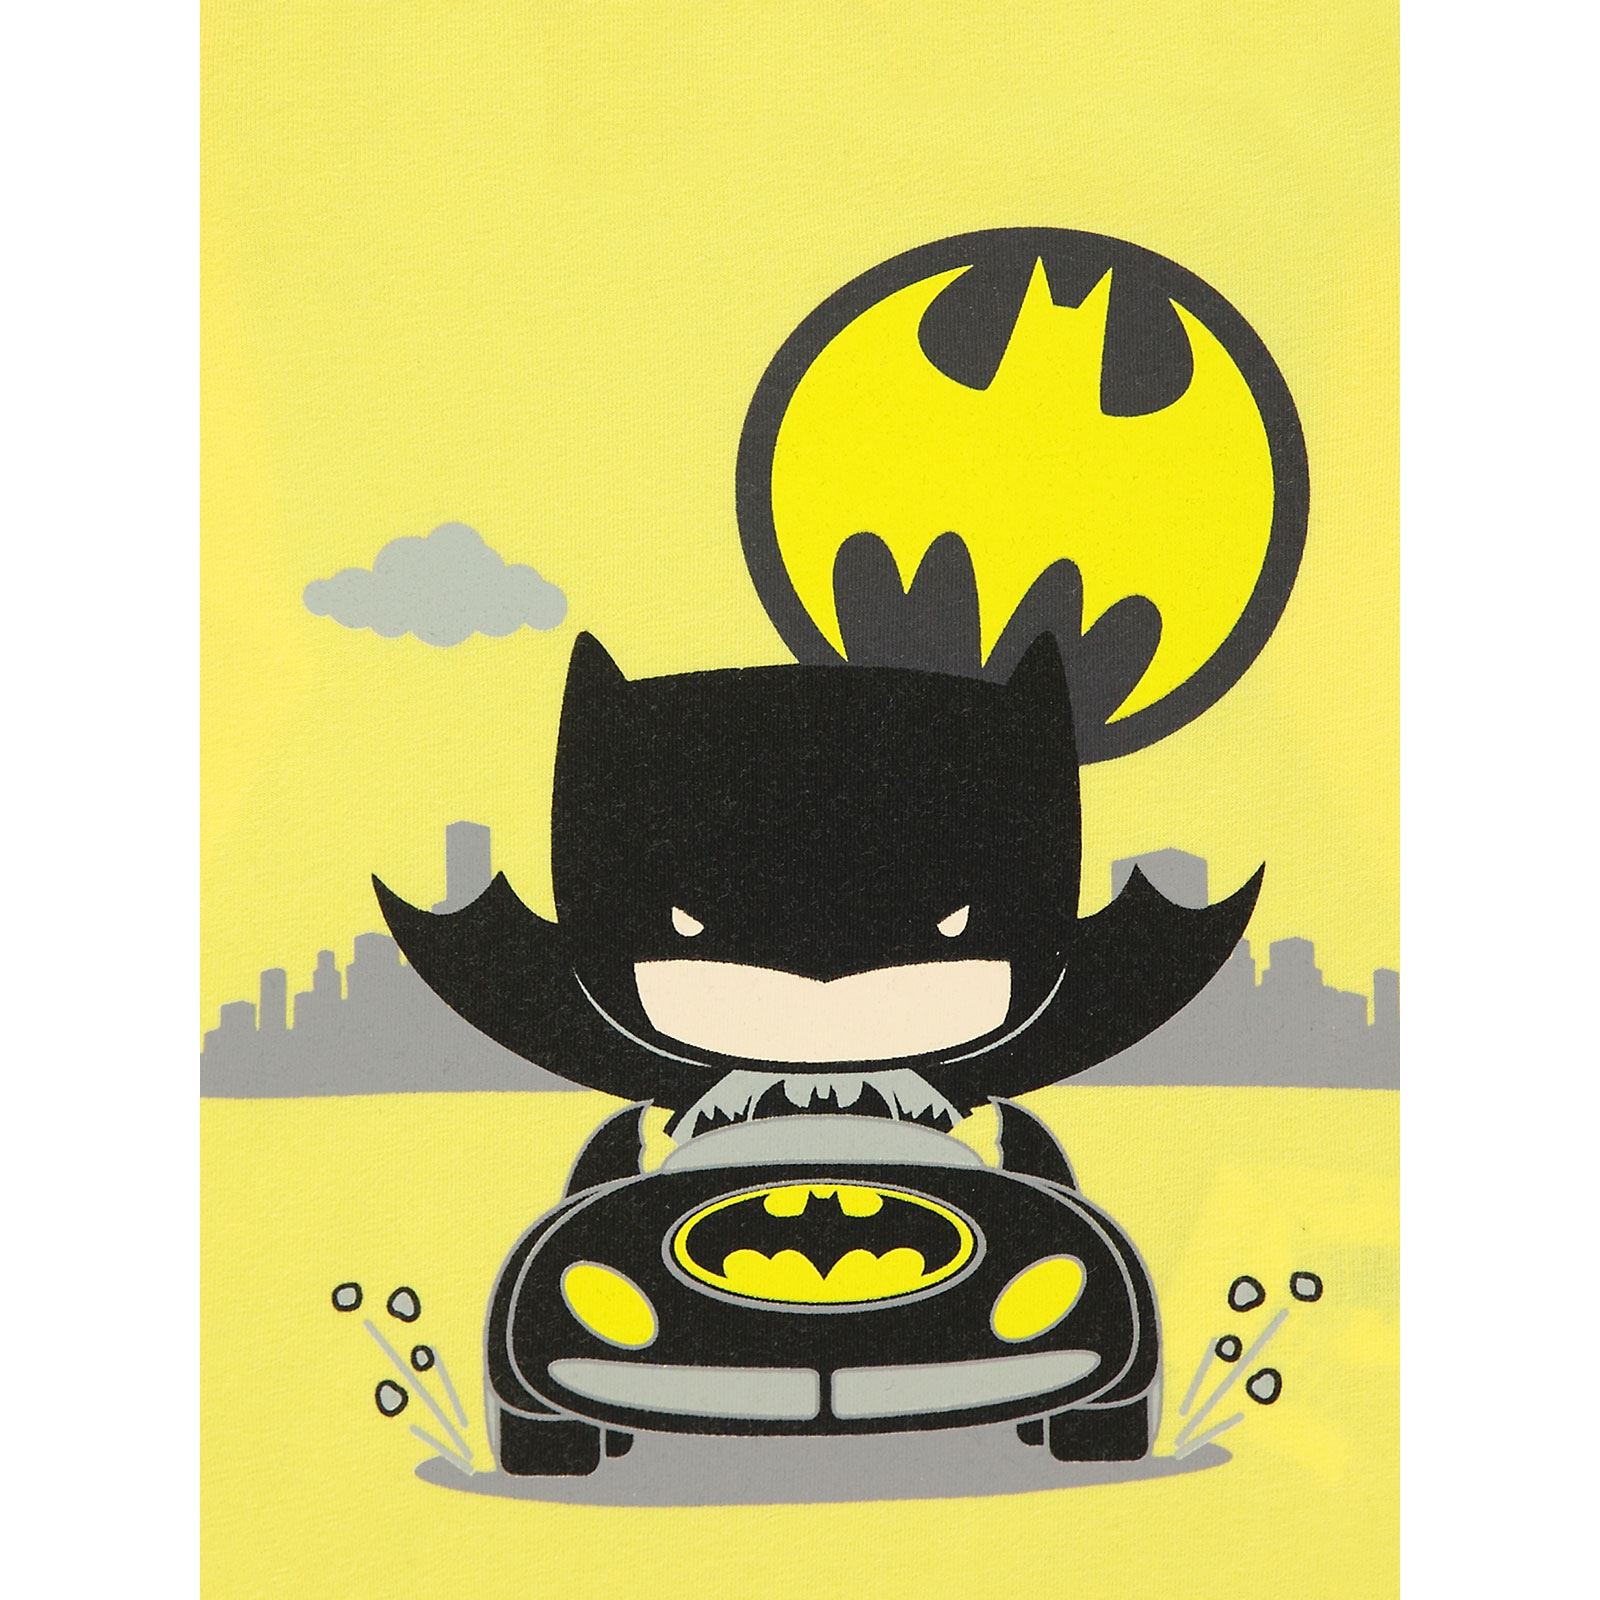 Batman Erkek Bebek Sweatshirt 6-18 Ay Sarı